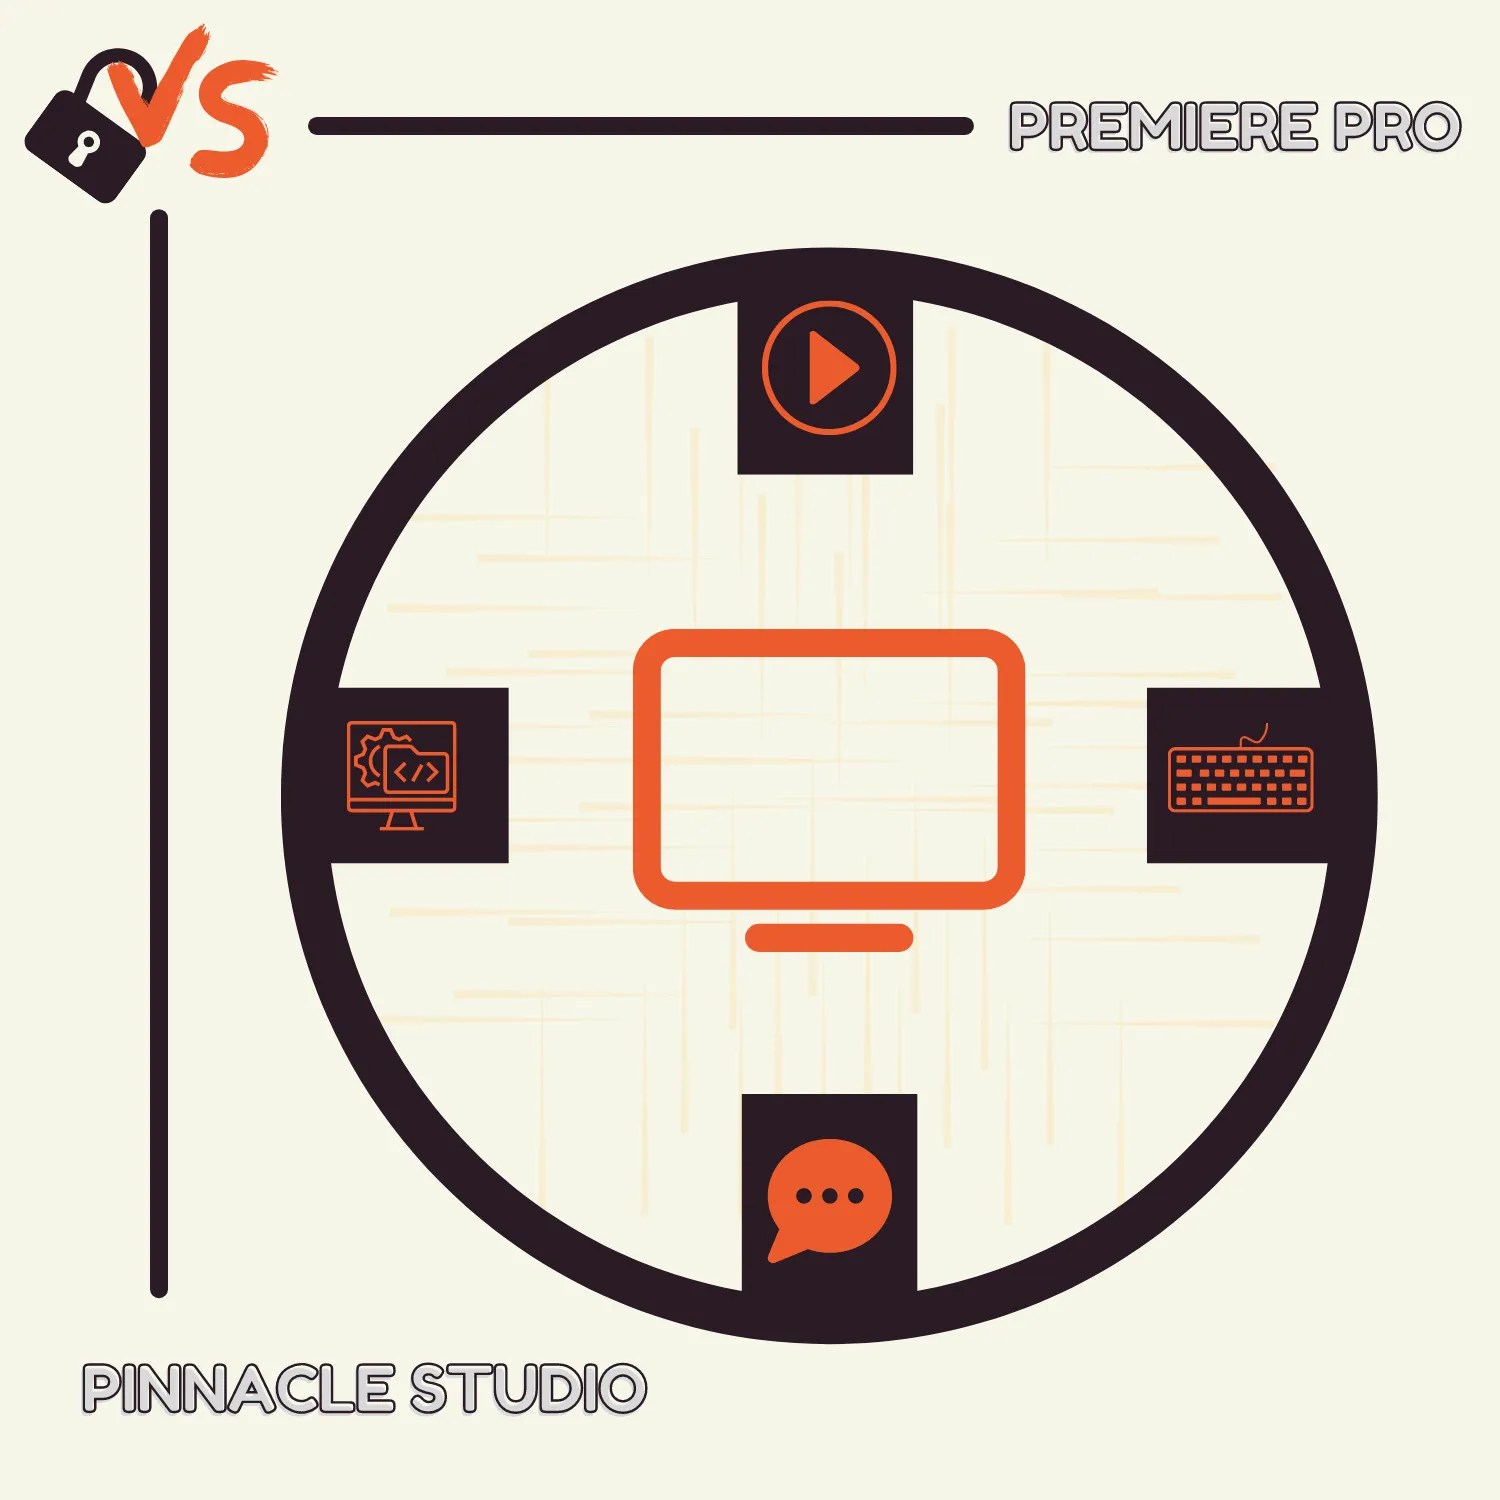 Pinnacle Studio vs Premiere Pro